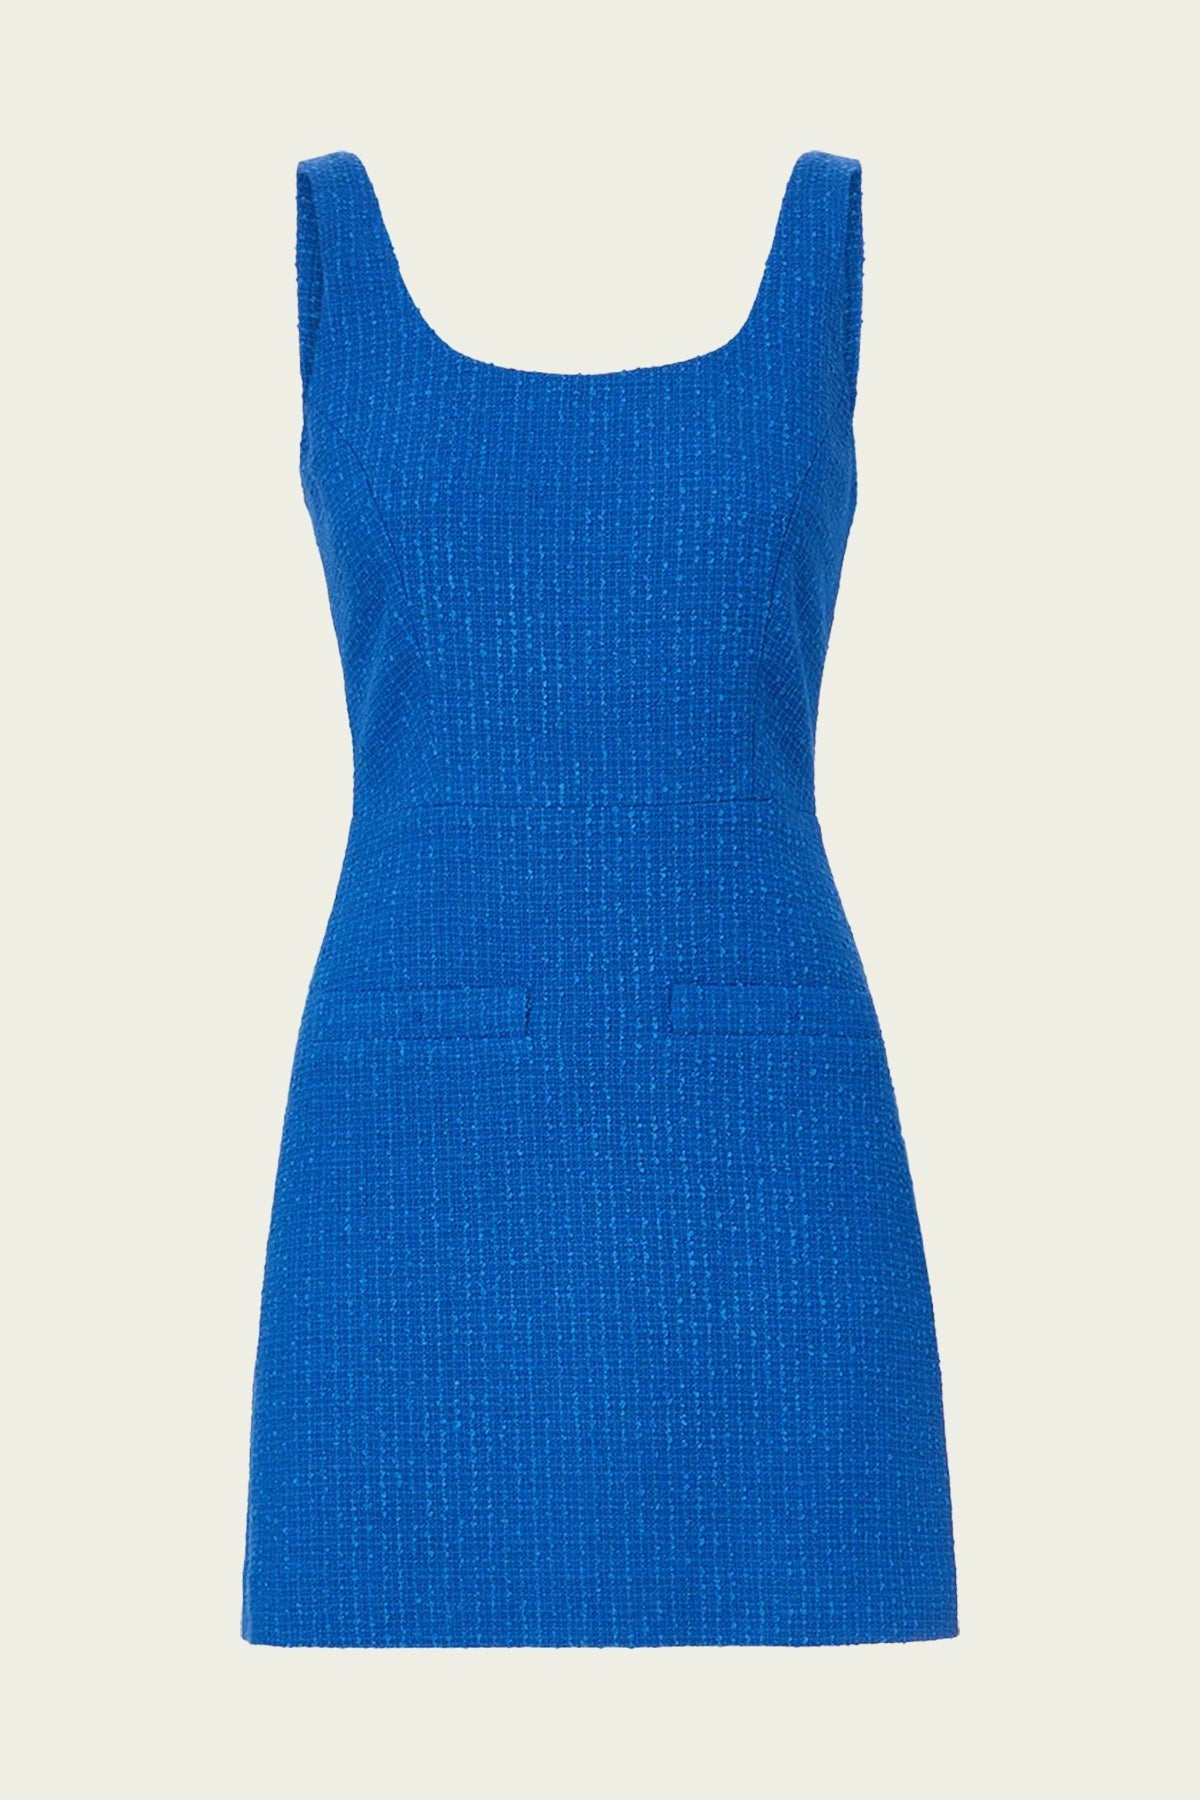 Sabra Tweed Dress in Cobalt - shop-olivia.com